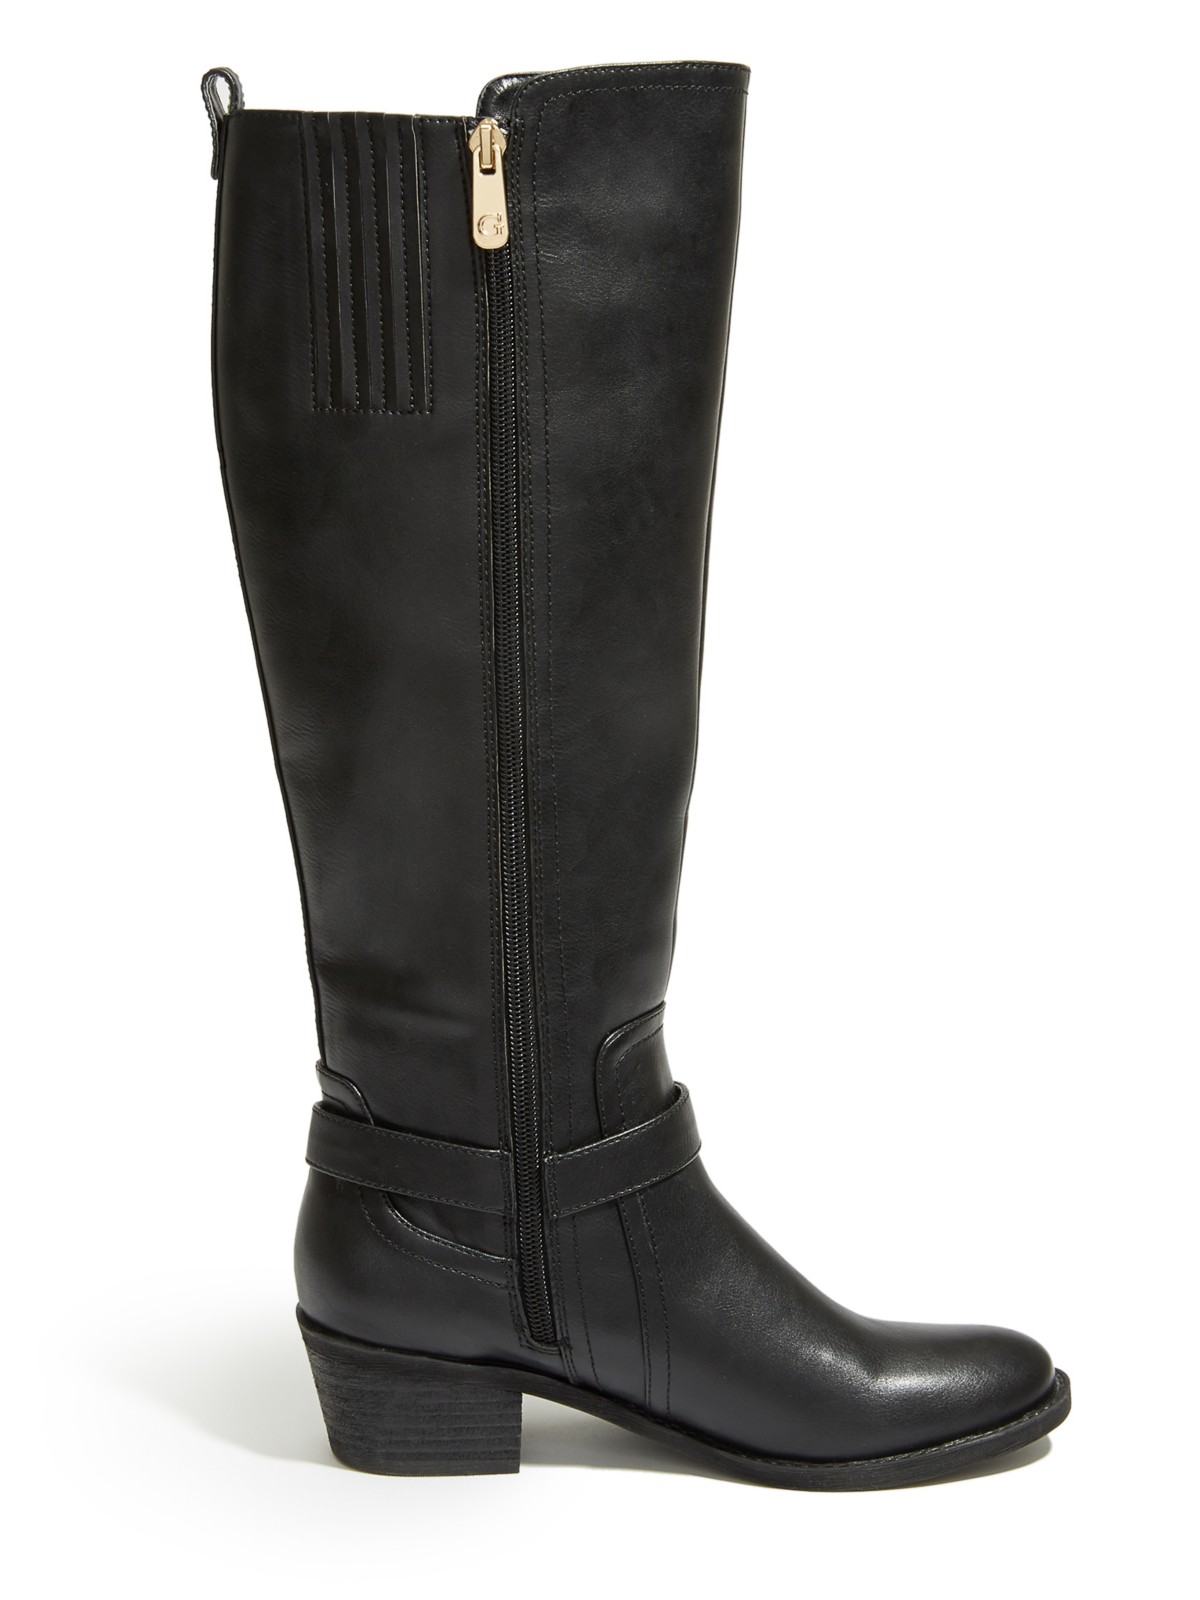 GUESS Roselin Knee High Harness Boots | eBay